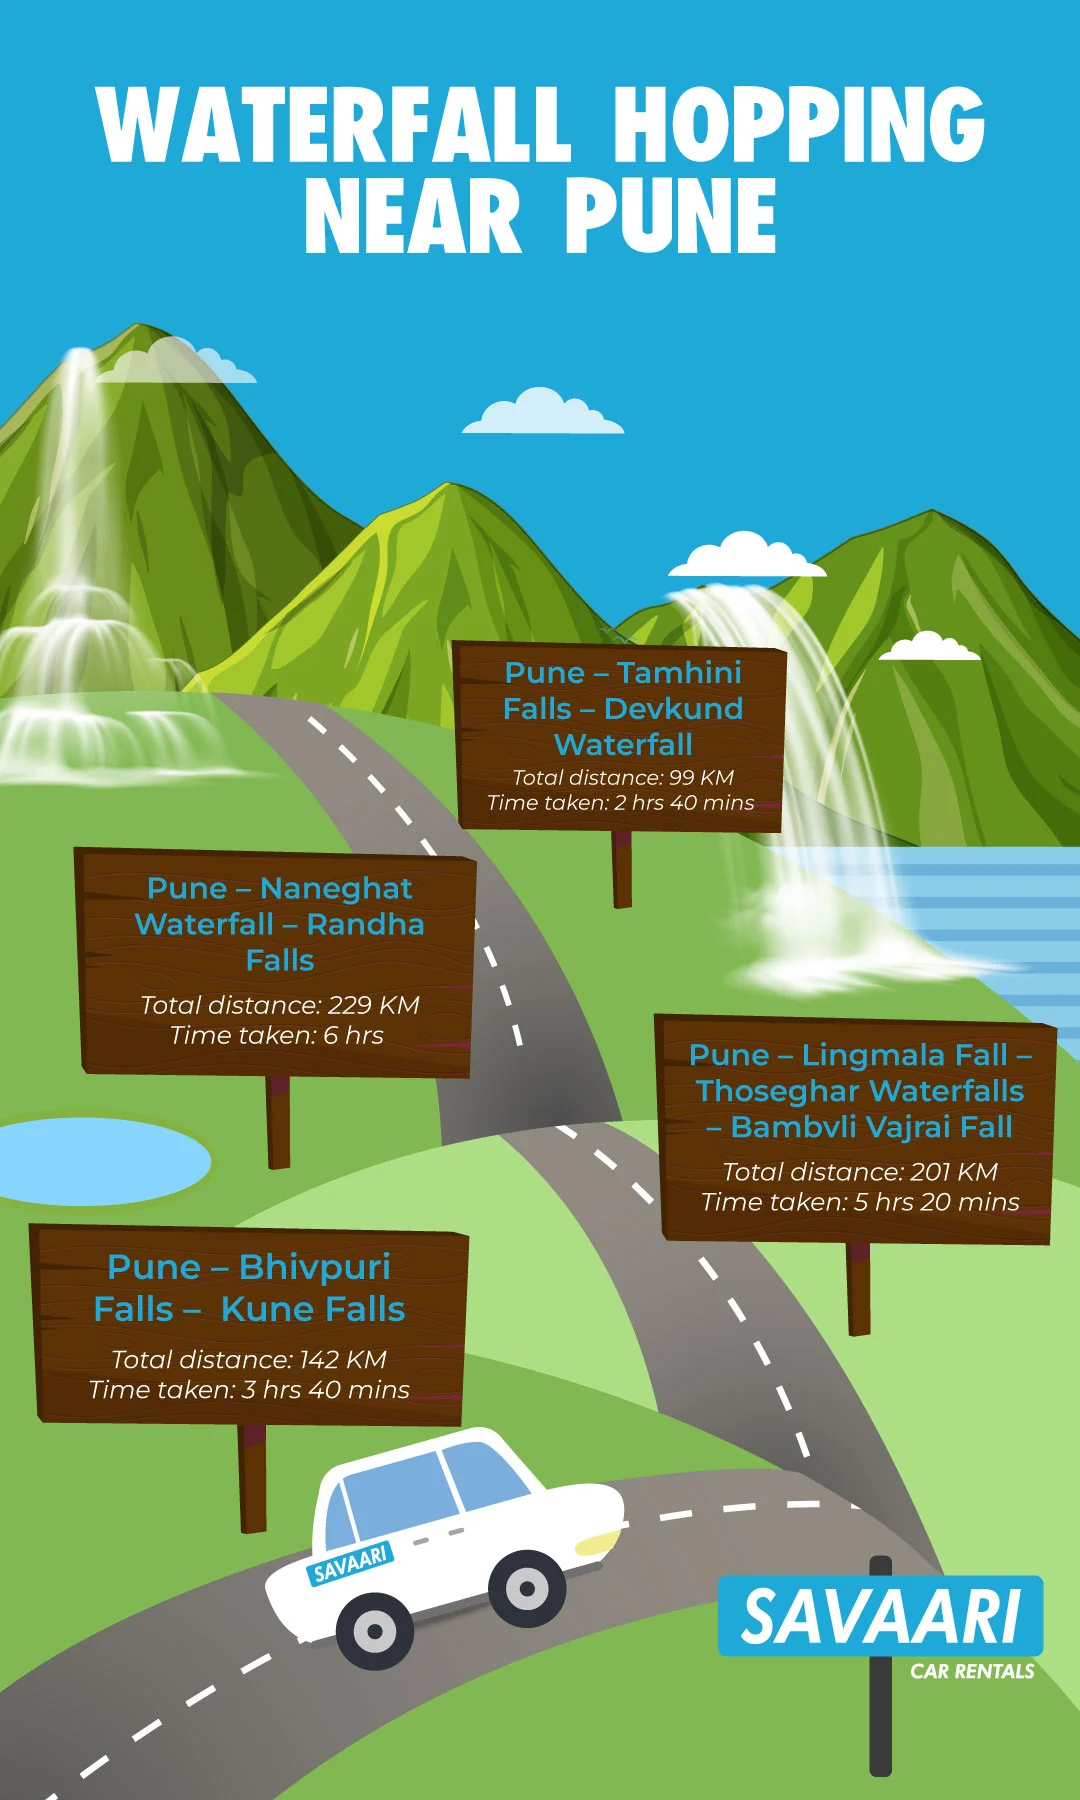 Waterfalls near Pune